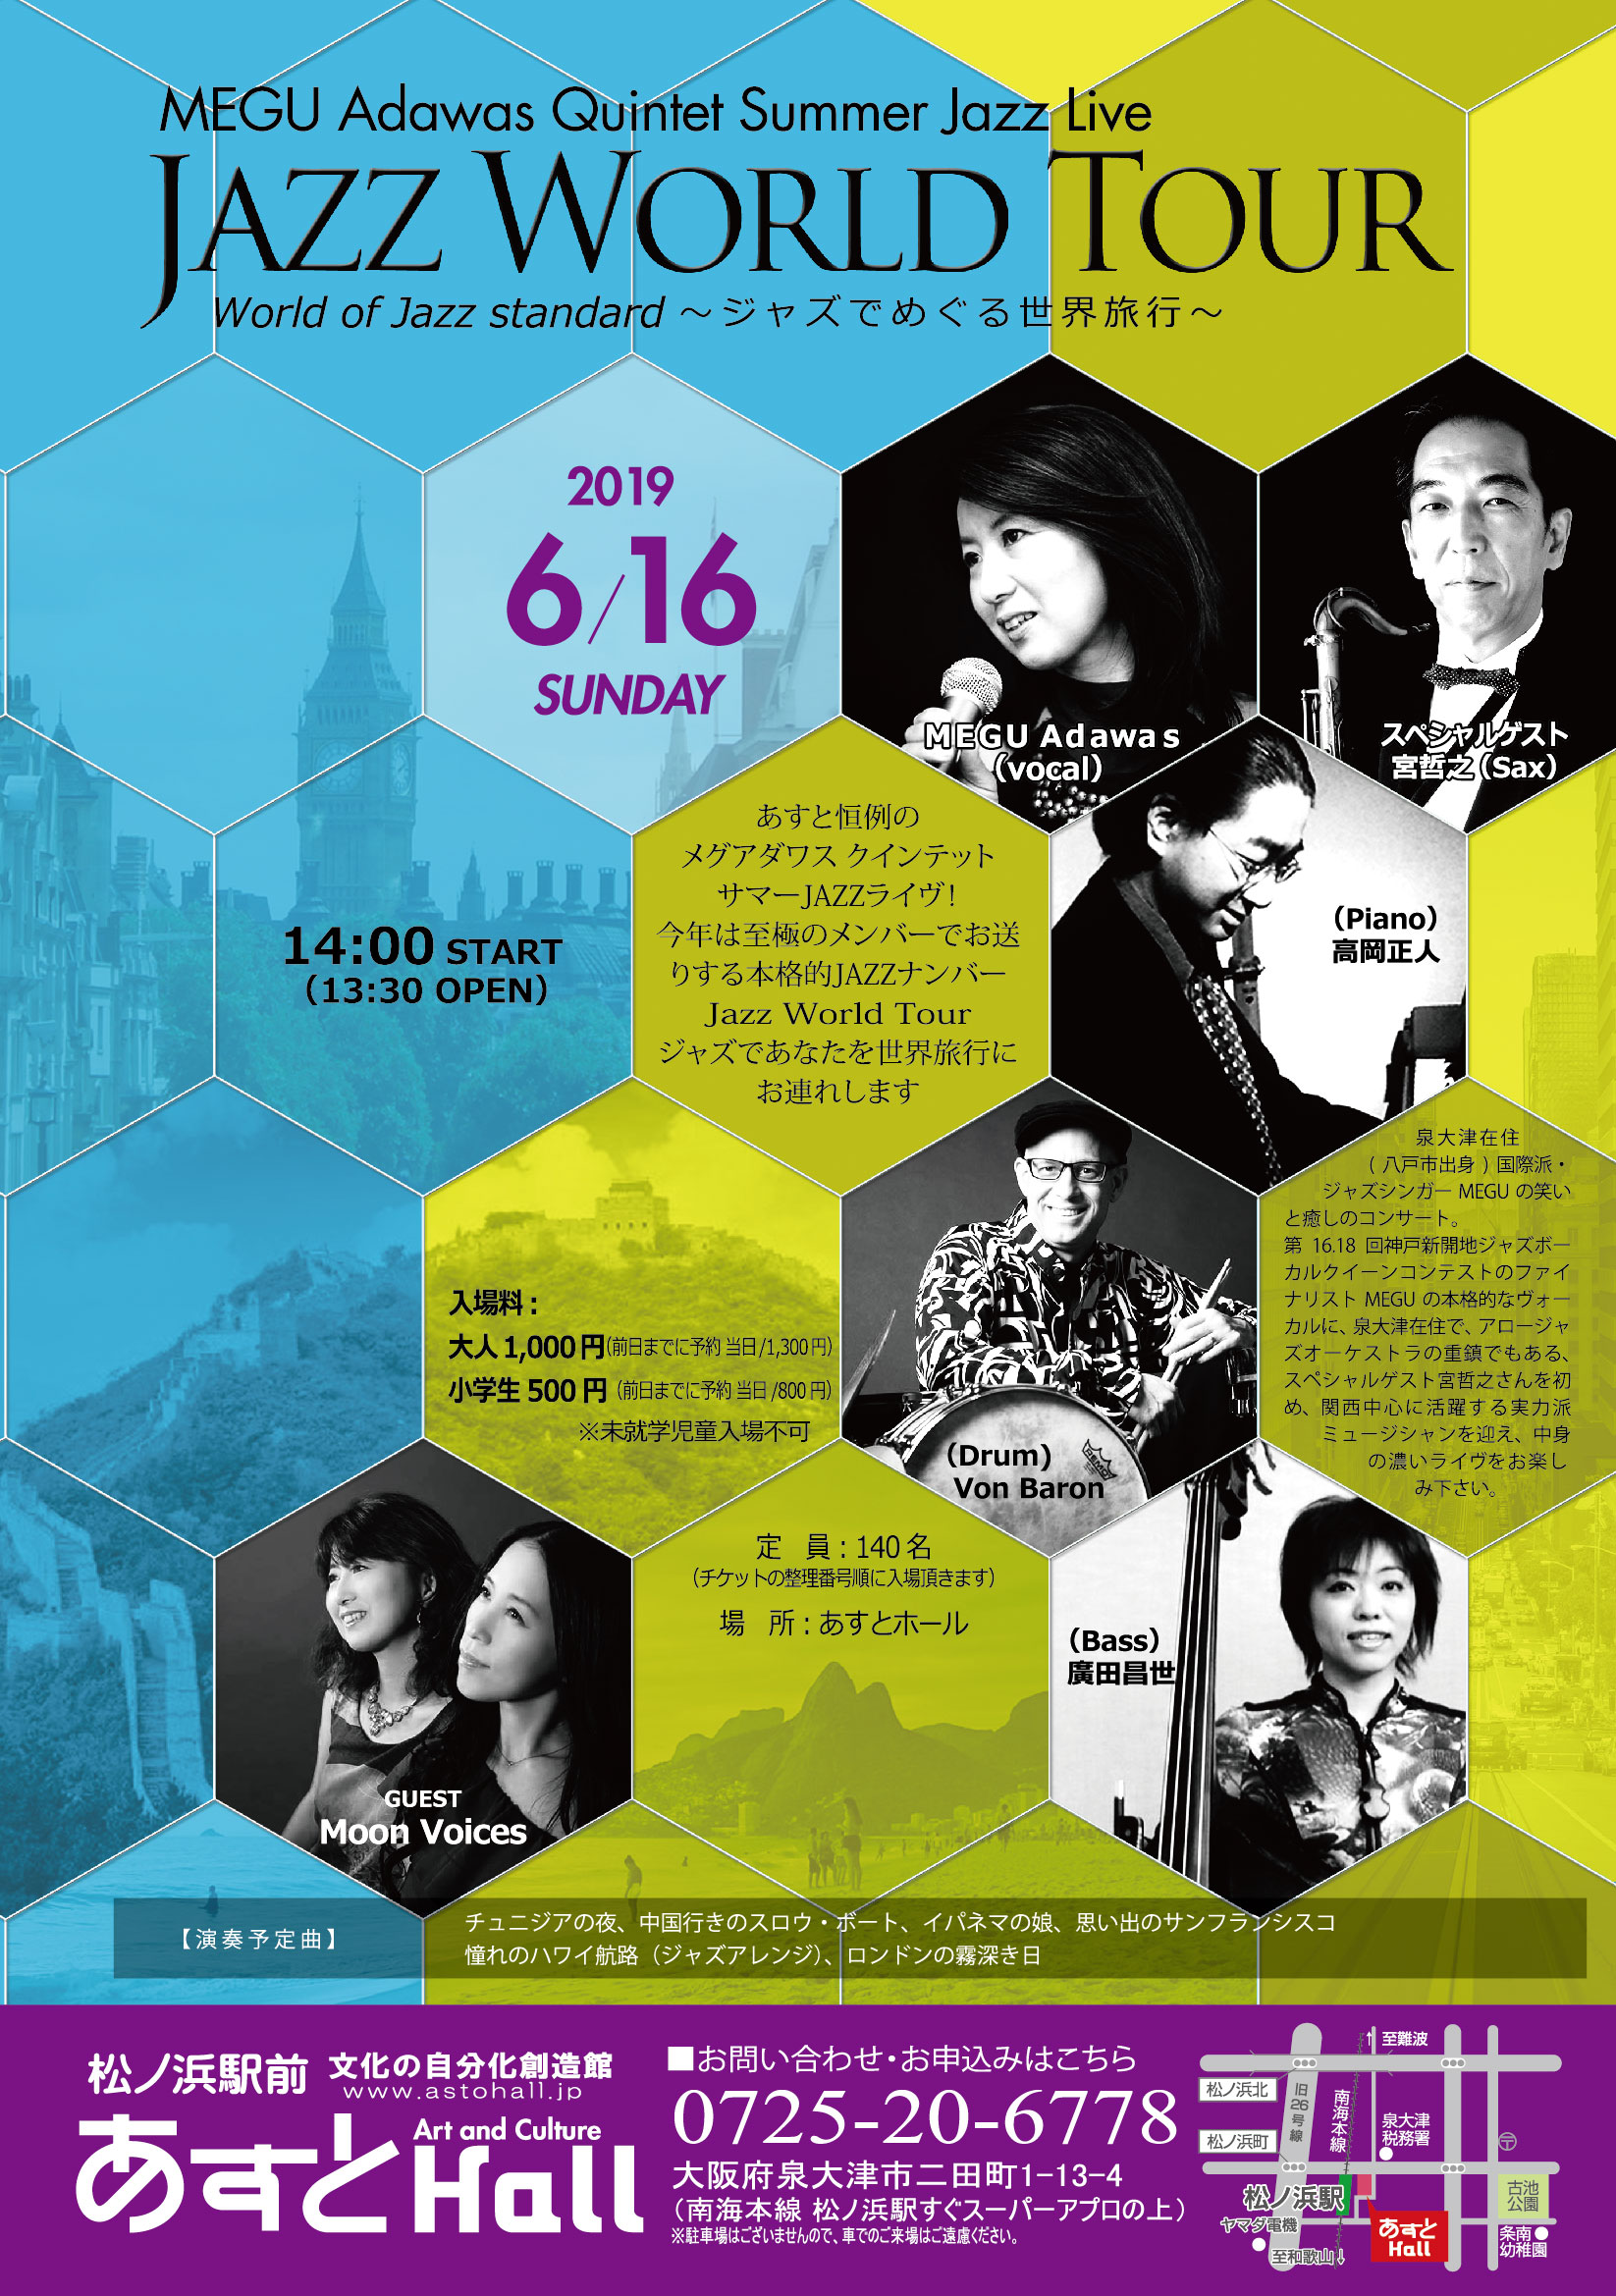 MEGU Adawas Quintet Summer Jazz Live「JAZZ WORLD TOUR」 World of Jazz standard～ジャズでめぐる世界旅行～